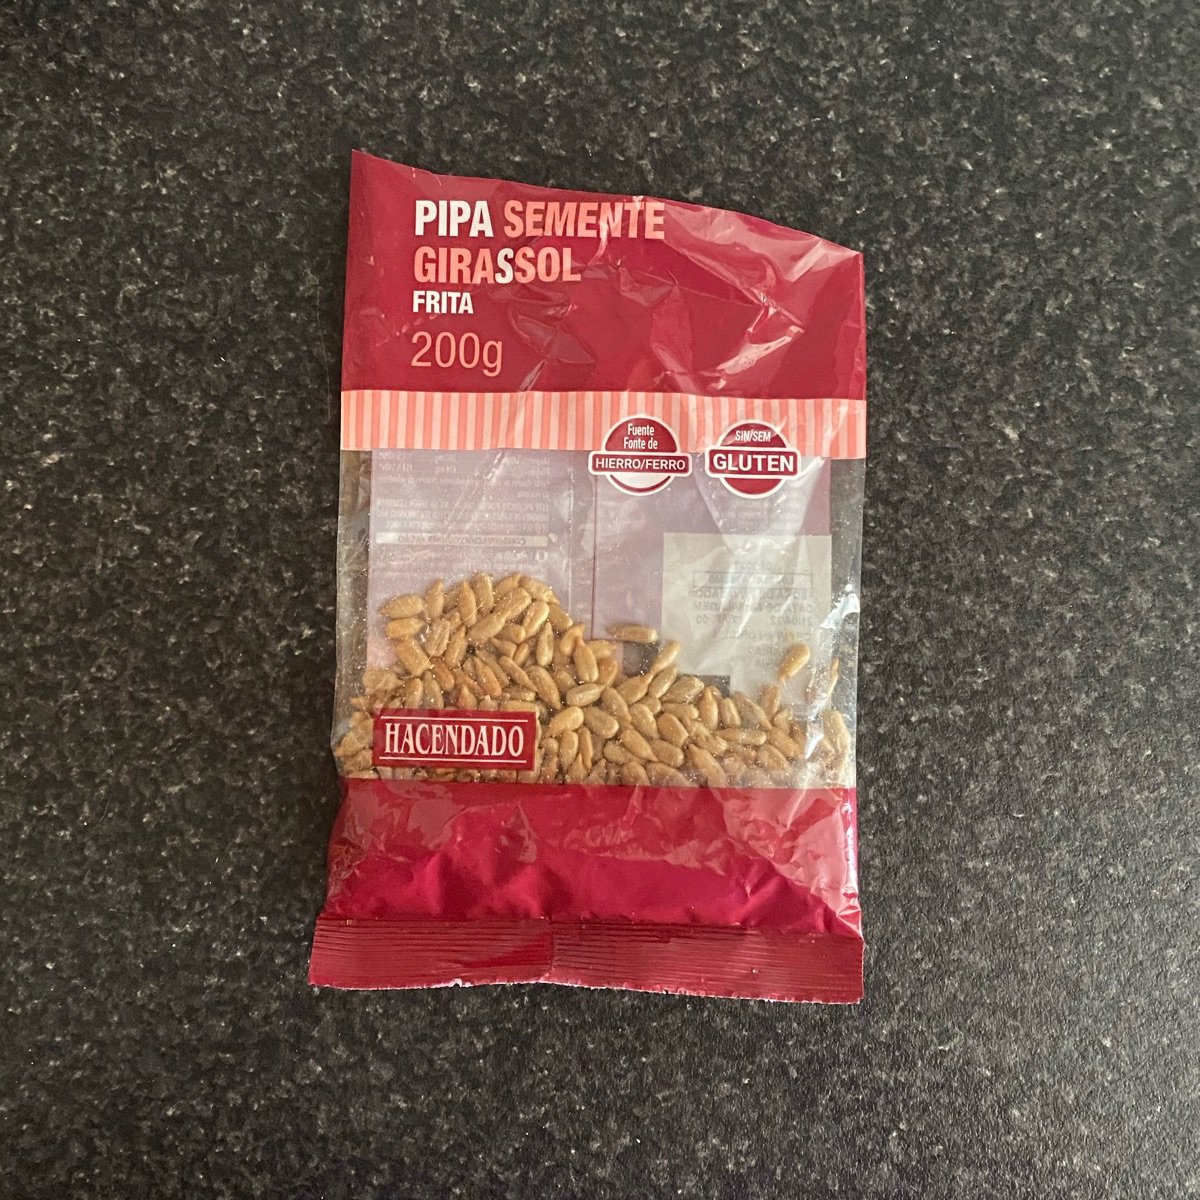 Hacendado Pipa semente girassol frita Reviews | abillion